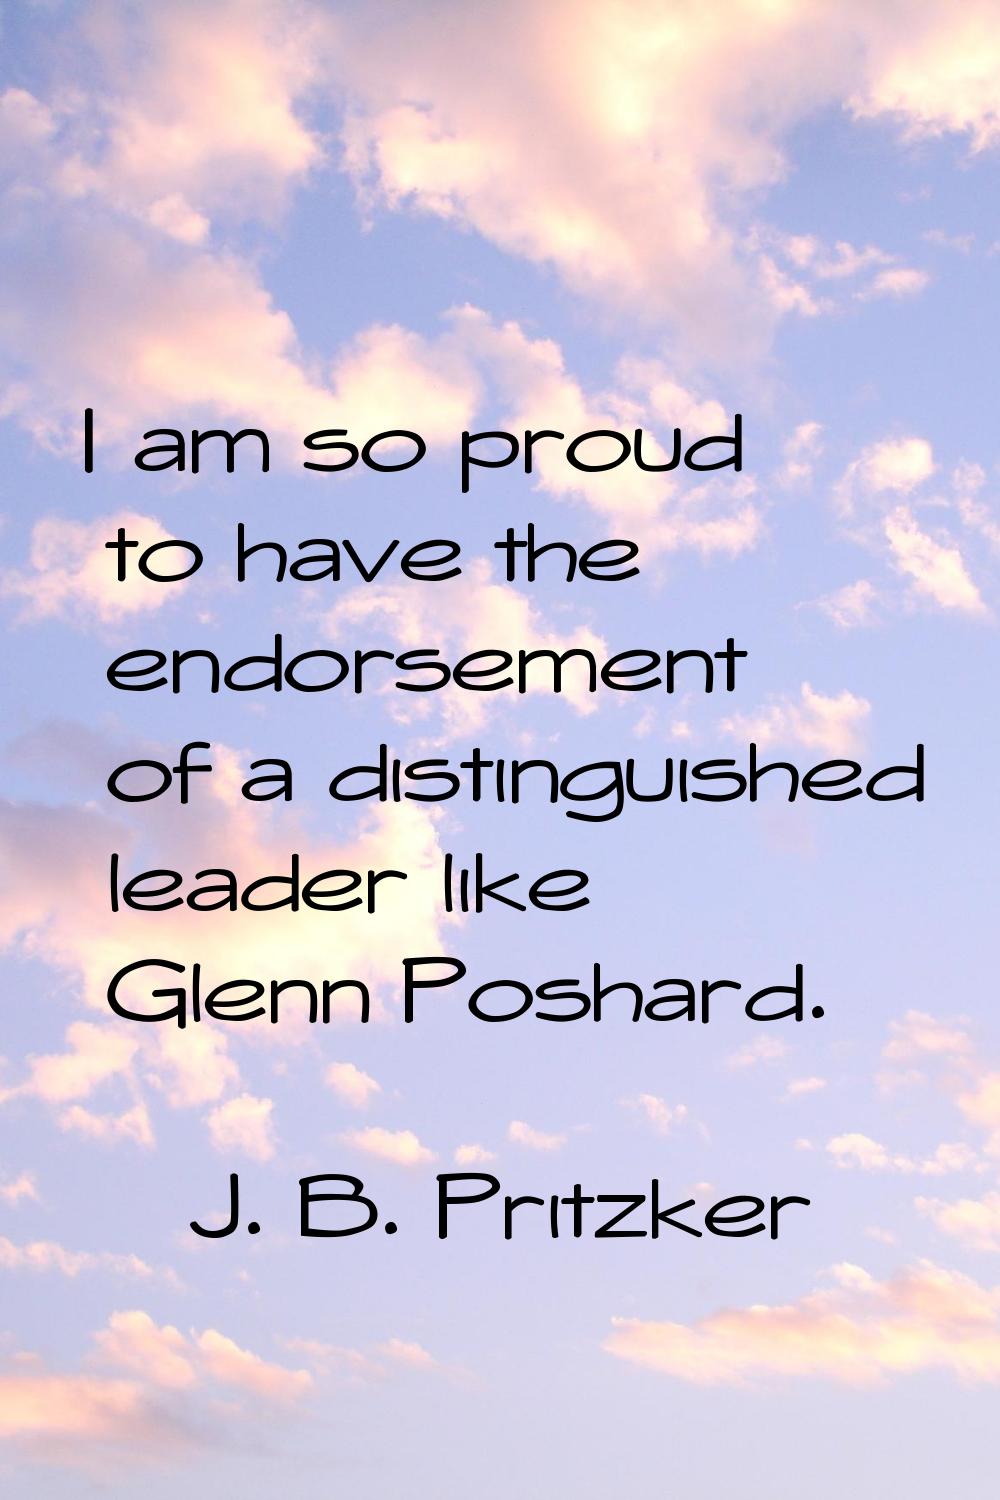 I am so proud to have the endorsement of a distinguished leader like Glenn Poshard.